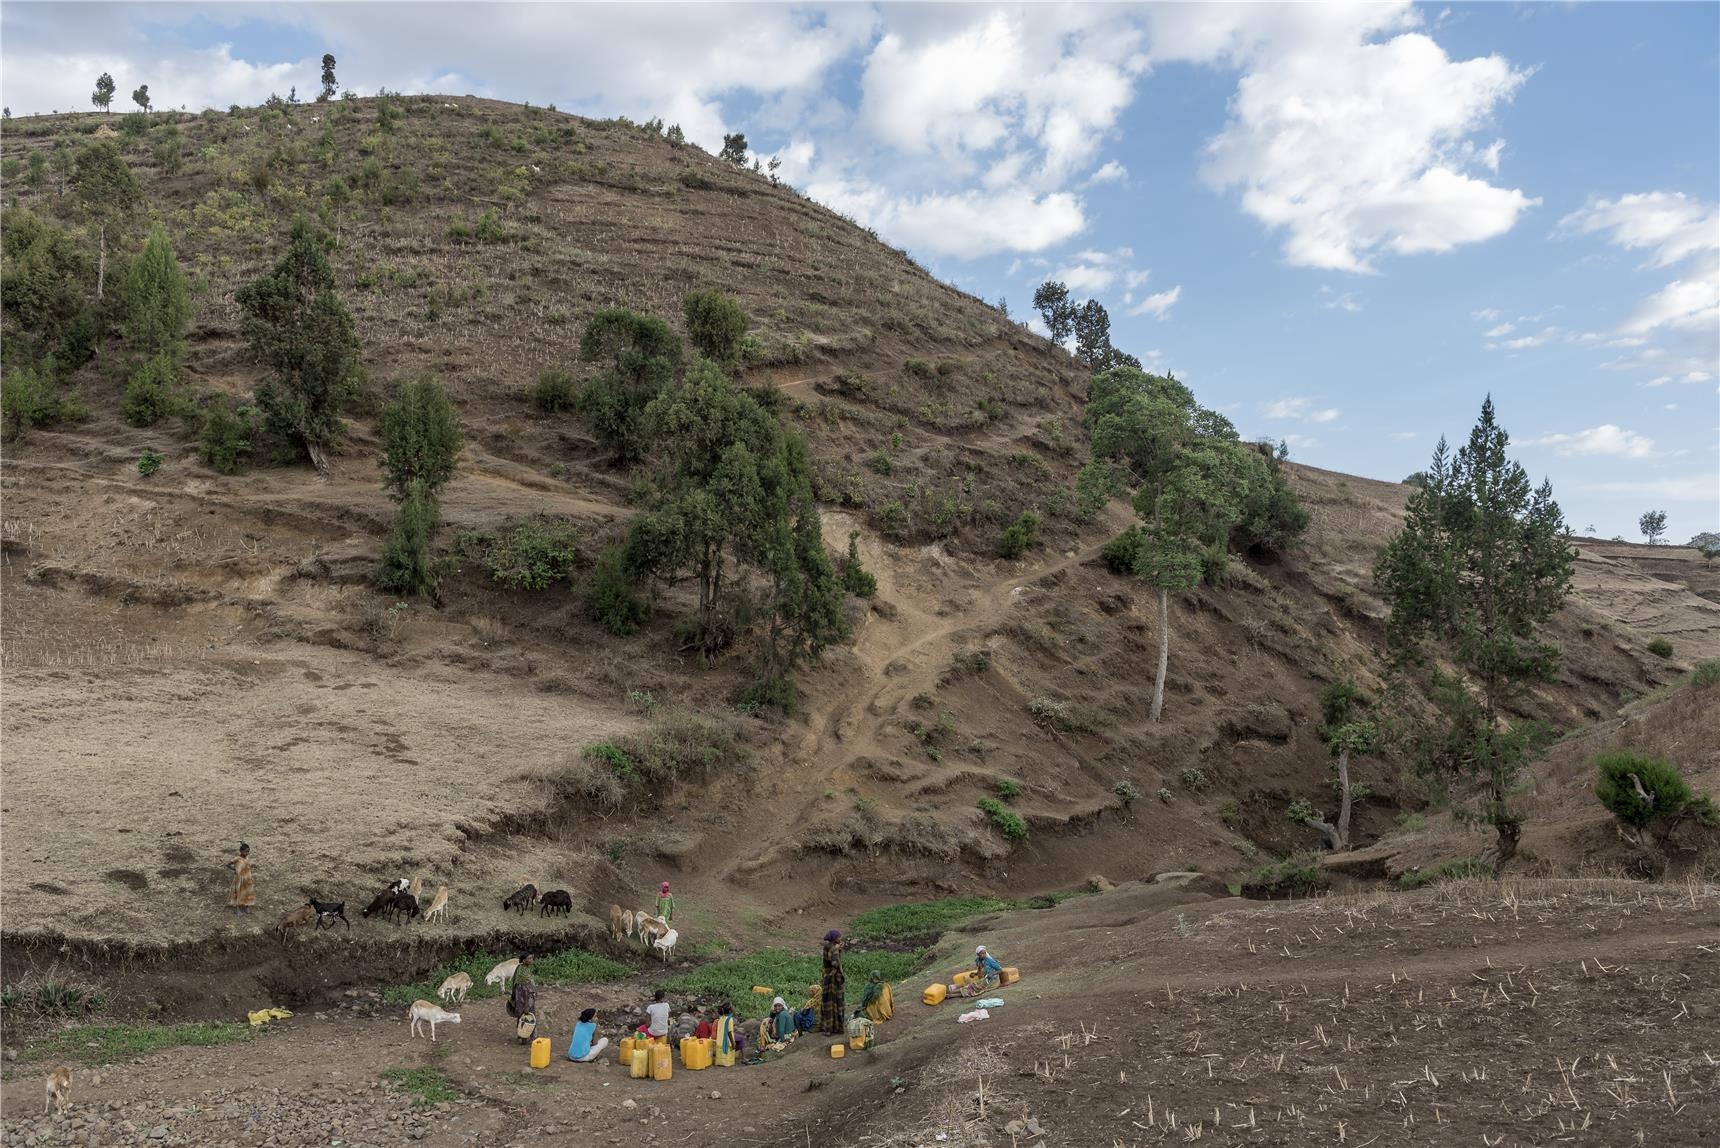 Ziegenweide in Äthiopien (Christoph Gödan)